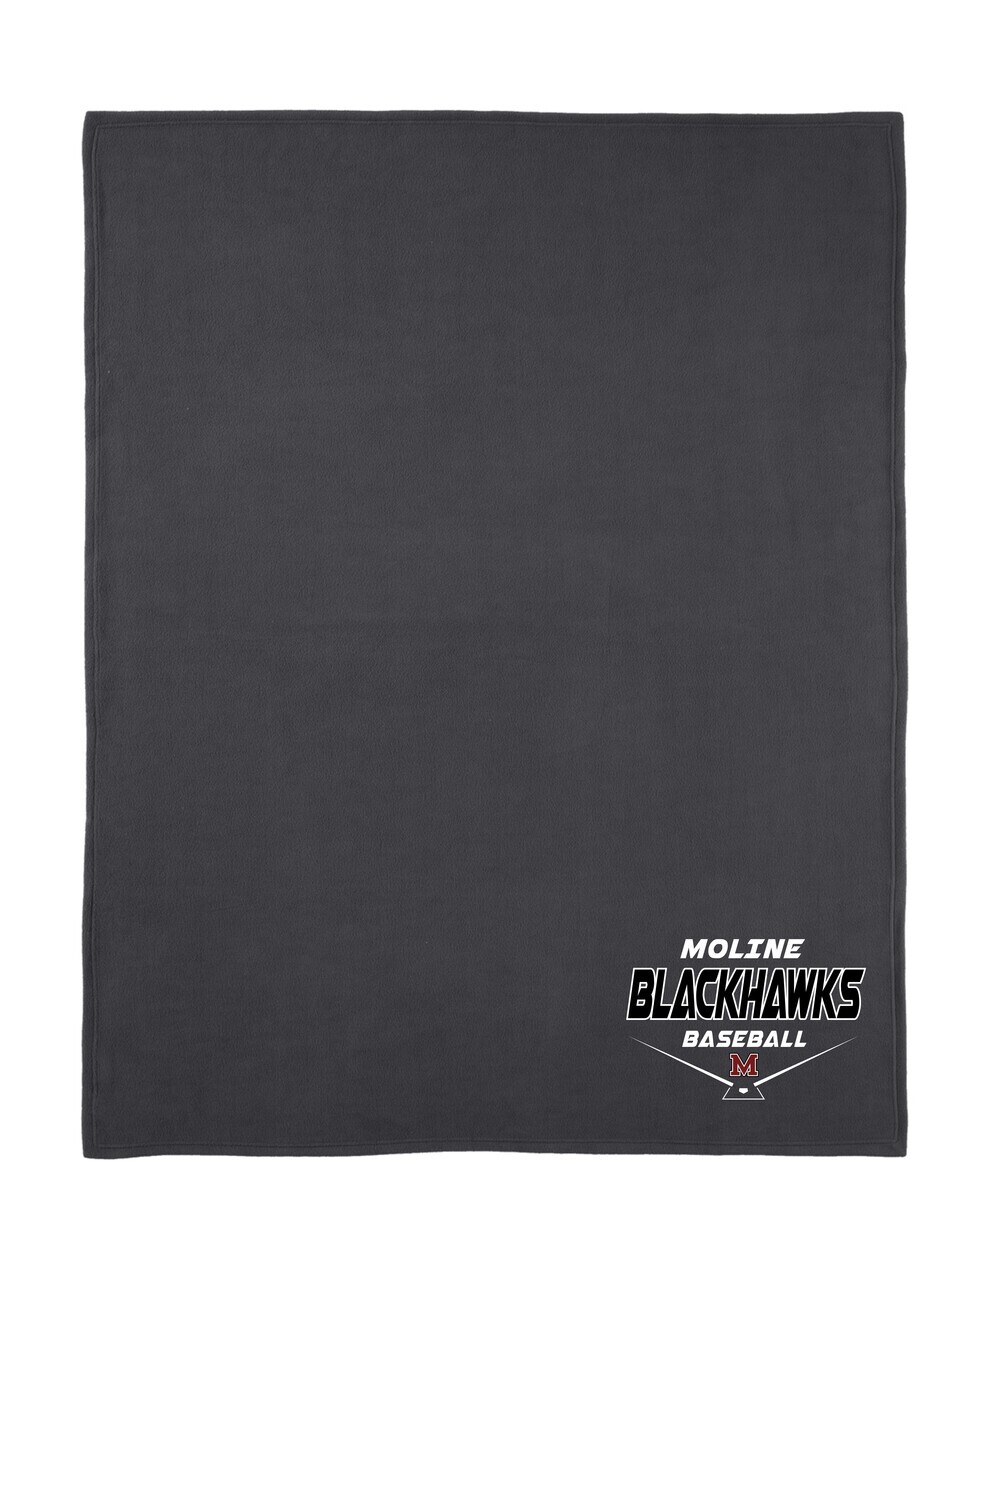 Moline Blackhawks Crossed Home Plate Logo Fleece Blanket with Carrying Strap